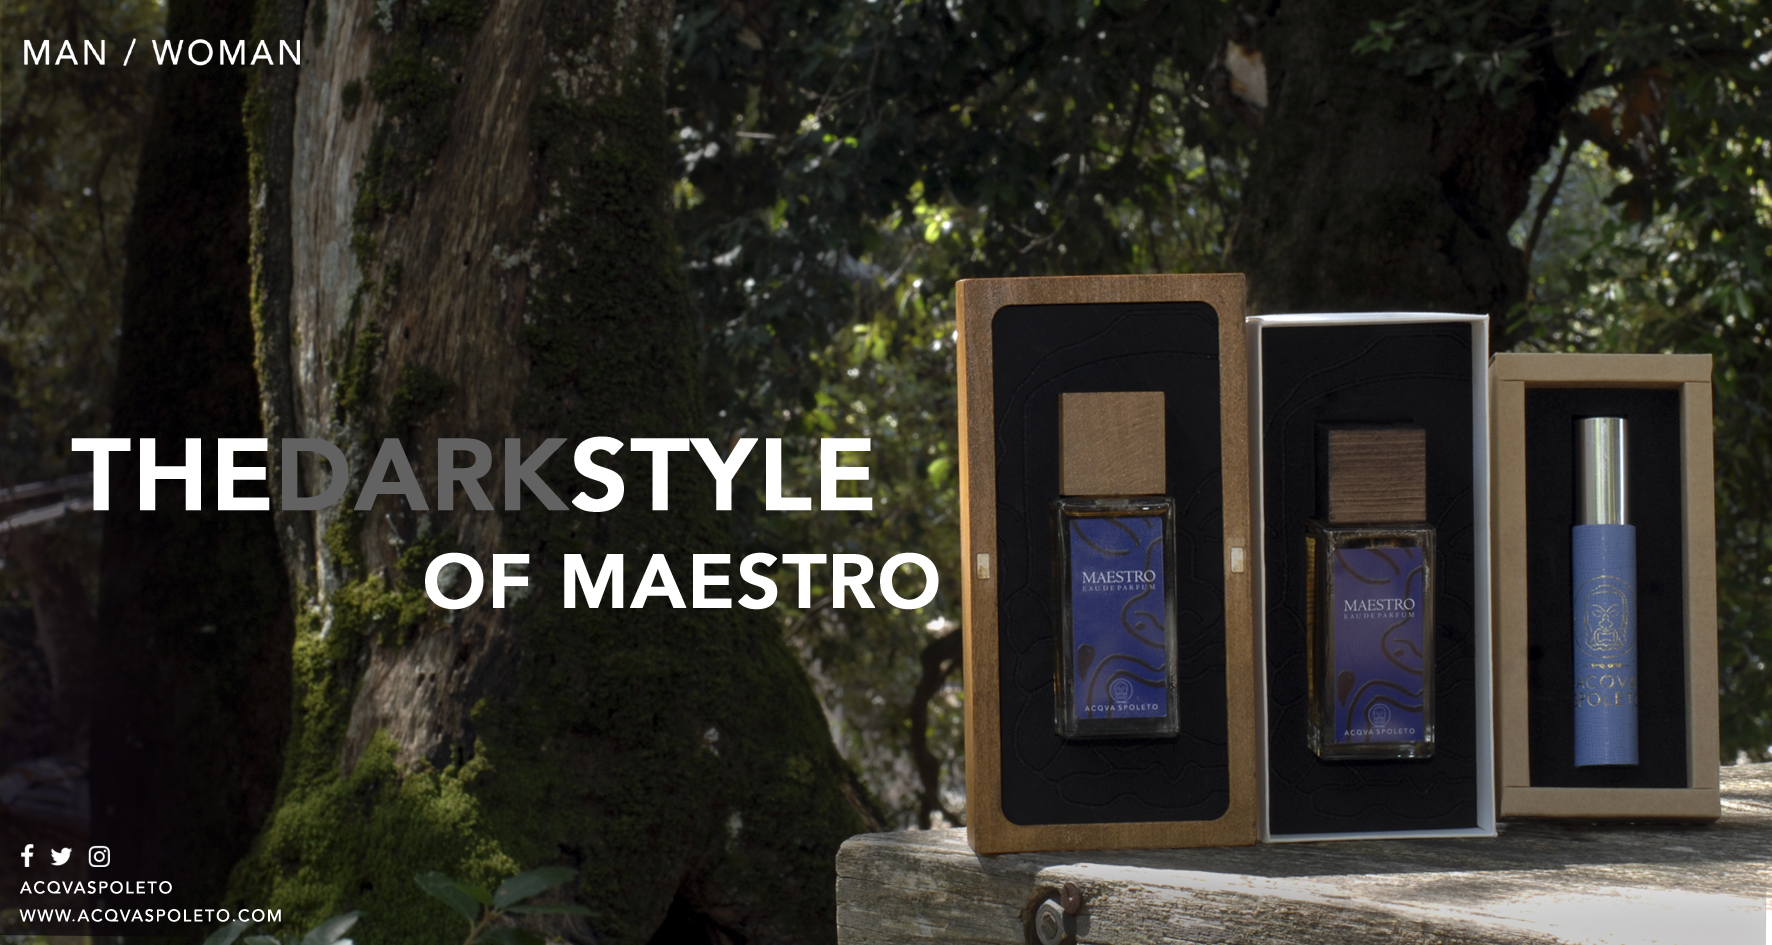 The dark style of Maestro